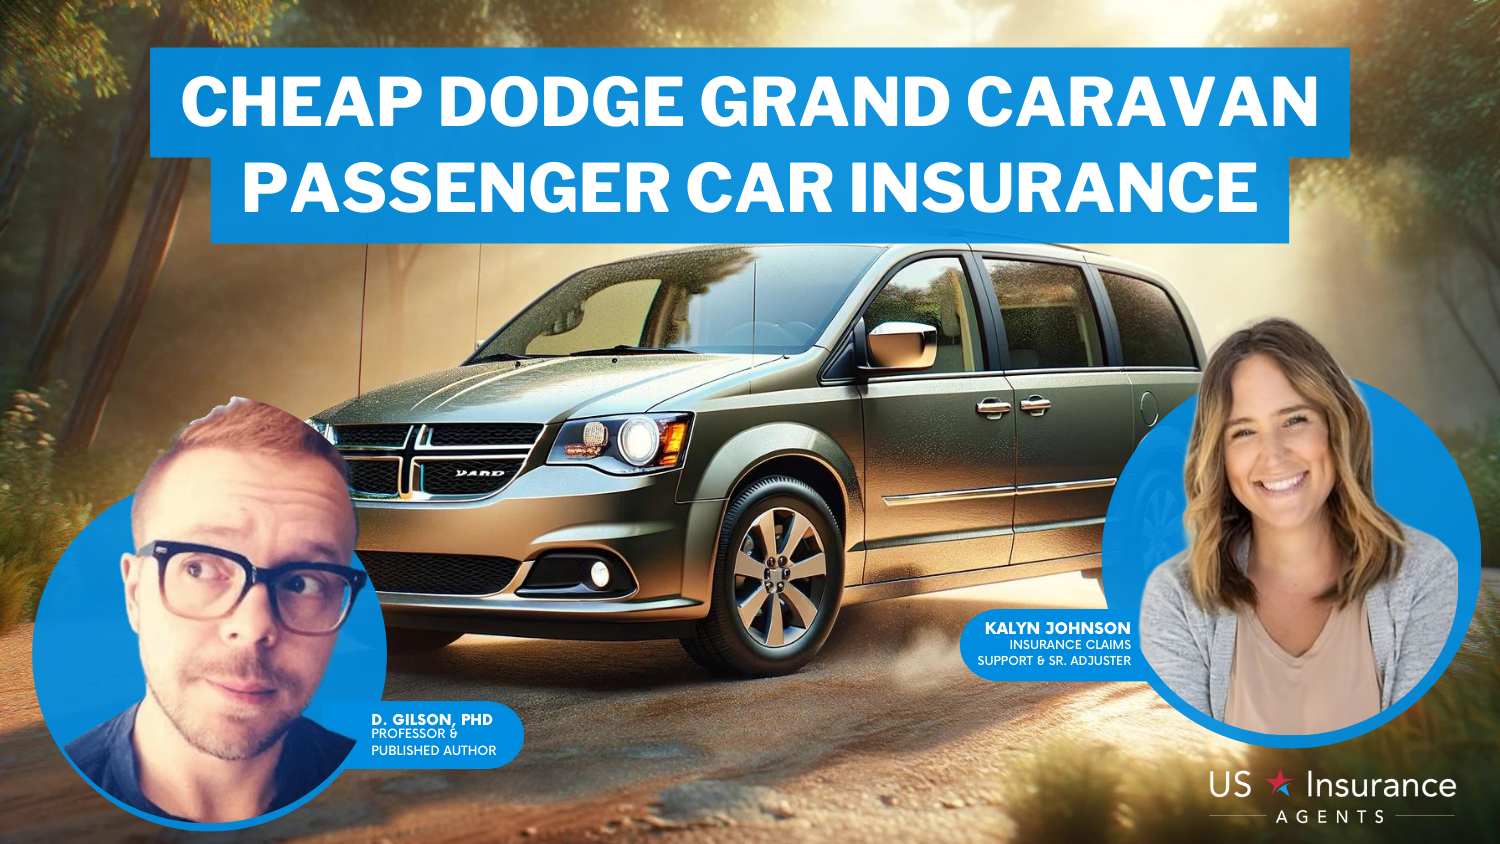 Cincinnati Insurance, Auto-Owners and Nationwide: cheap Dodge Grand Caravan Passenger car insurance 